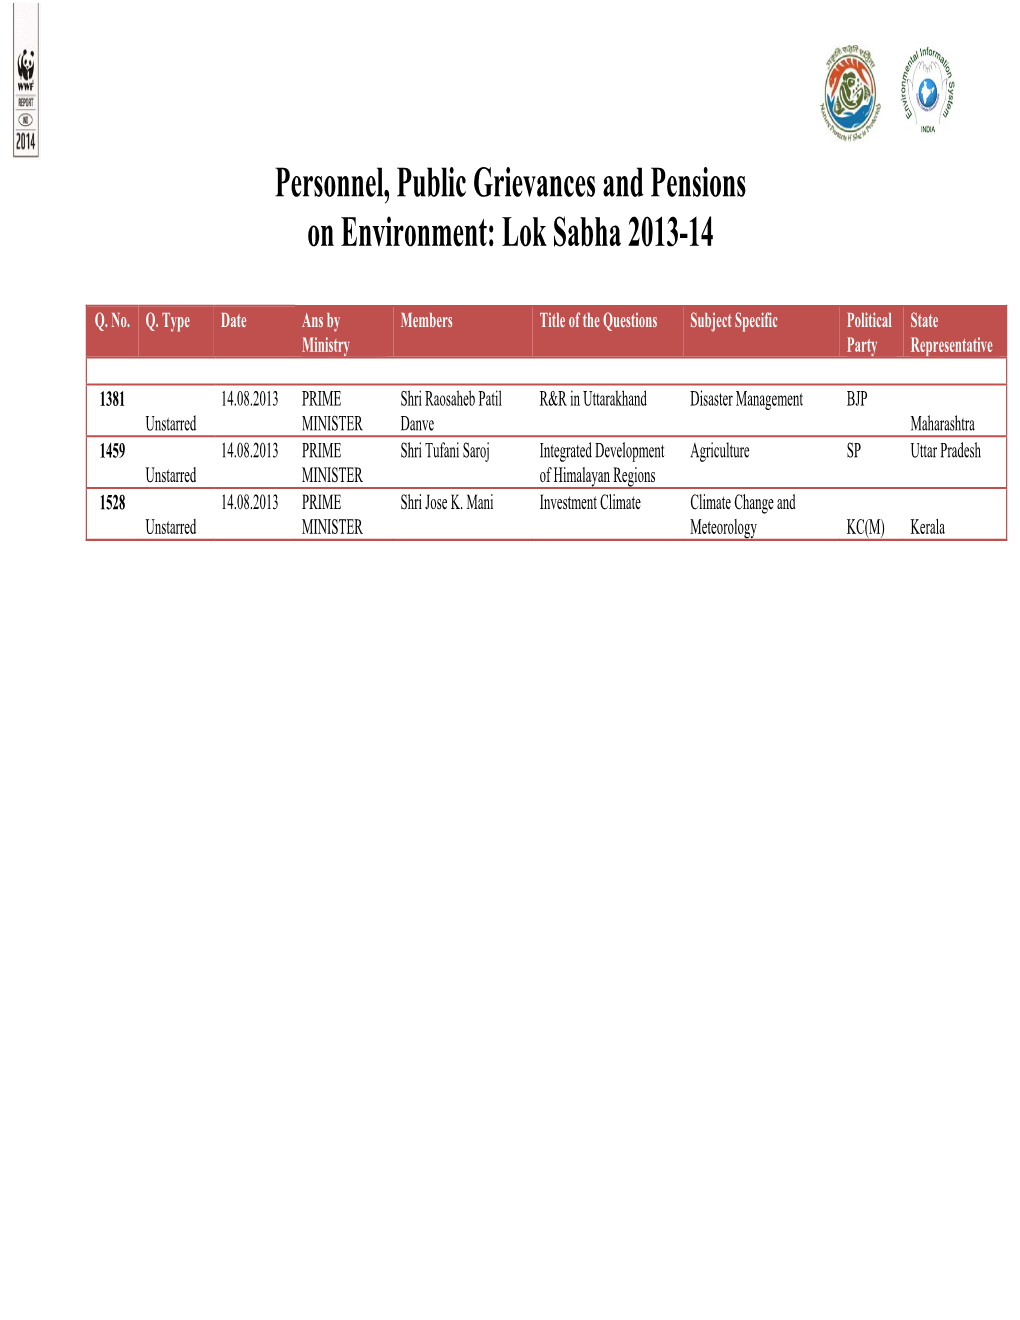 Personnel, Public Grievances and Pensions on Environment: Lok Sabha 2013-14